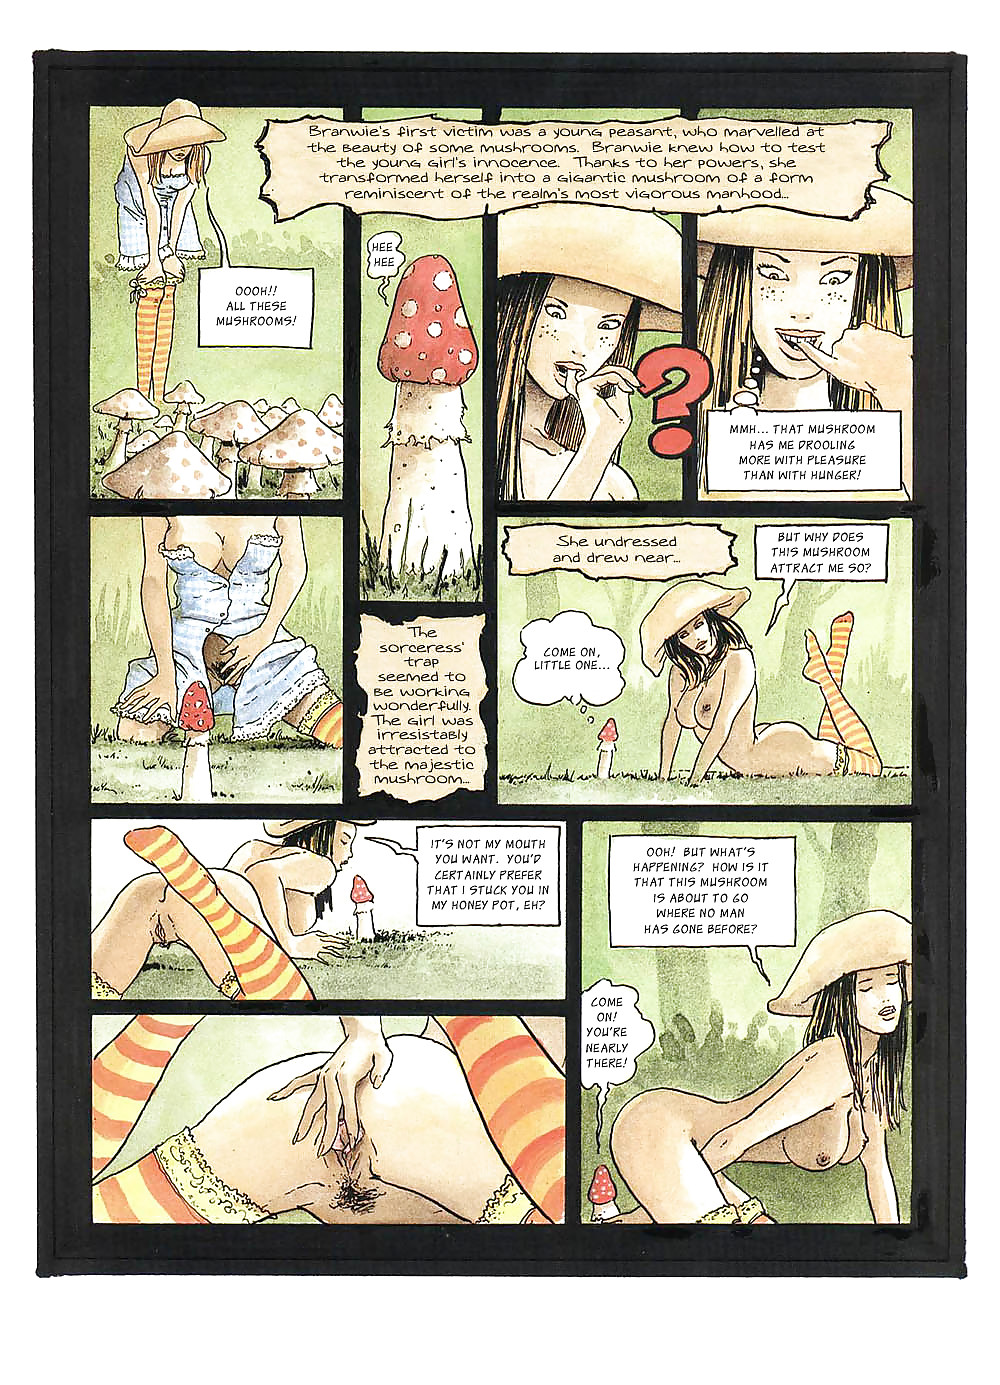 Comic - el sacrificio de la virgen (eng)
 #16339160